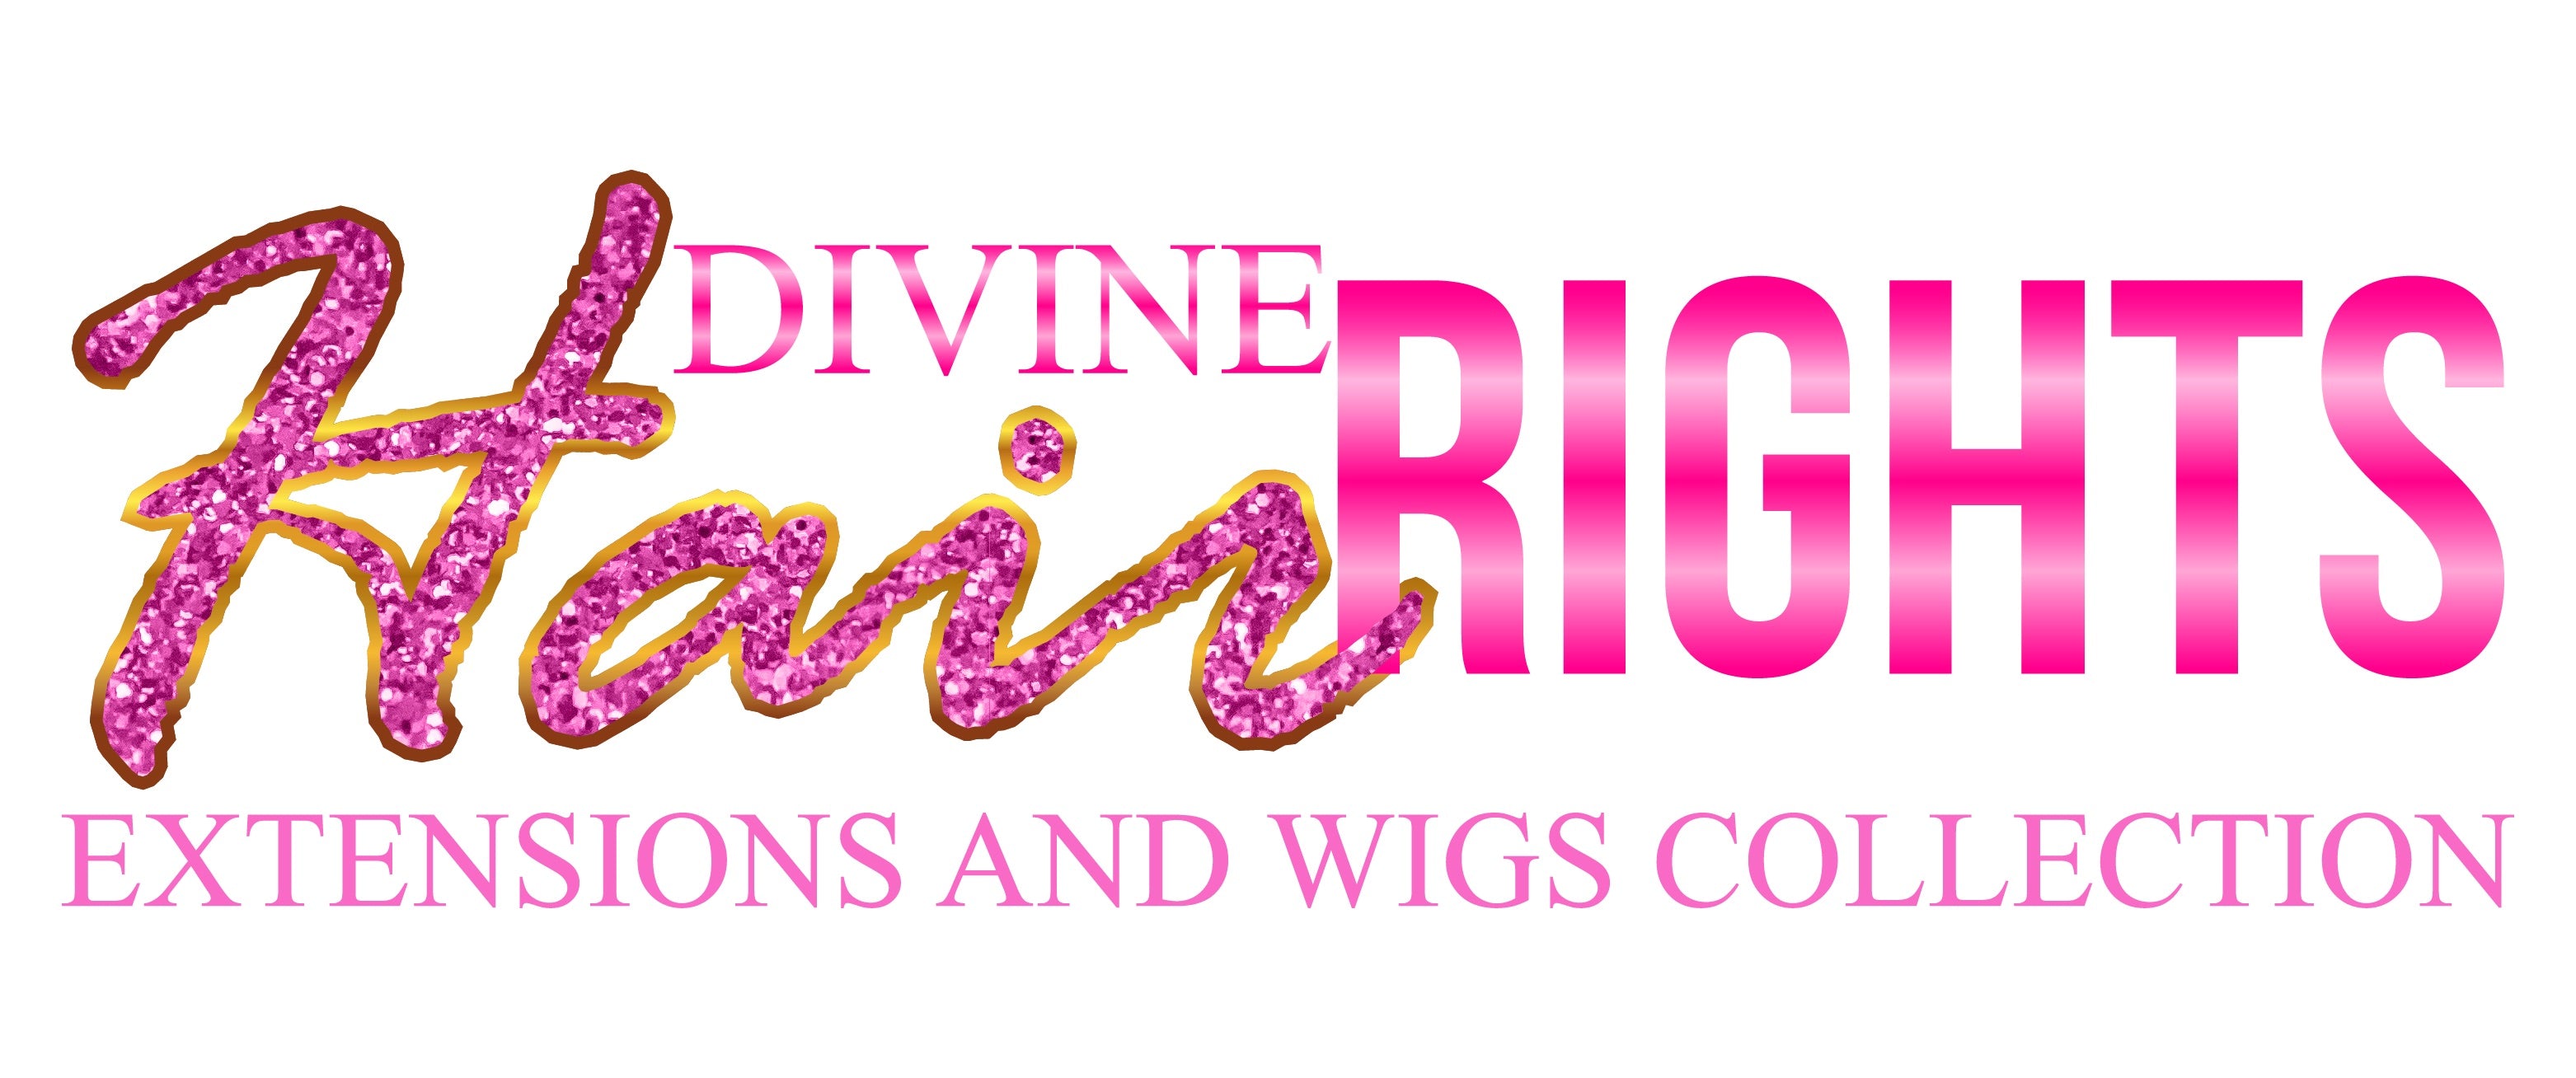 Divine Hair Rights 